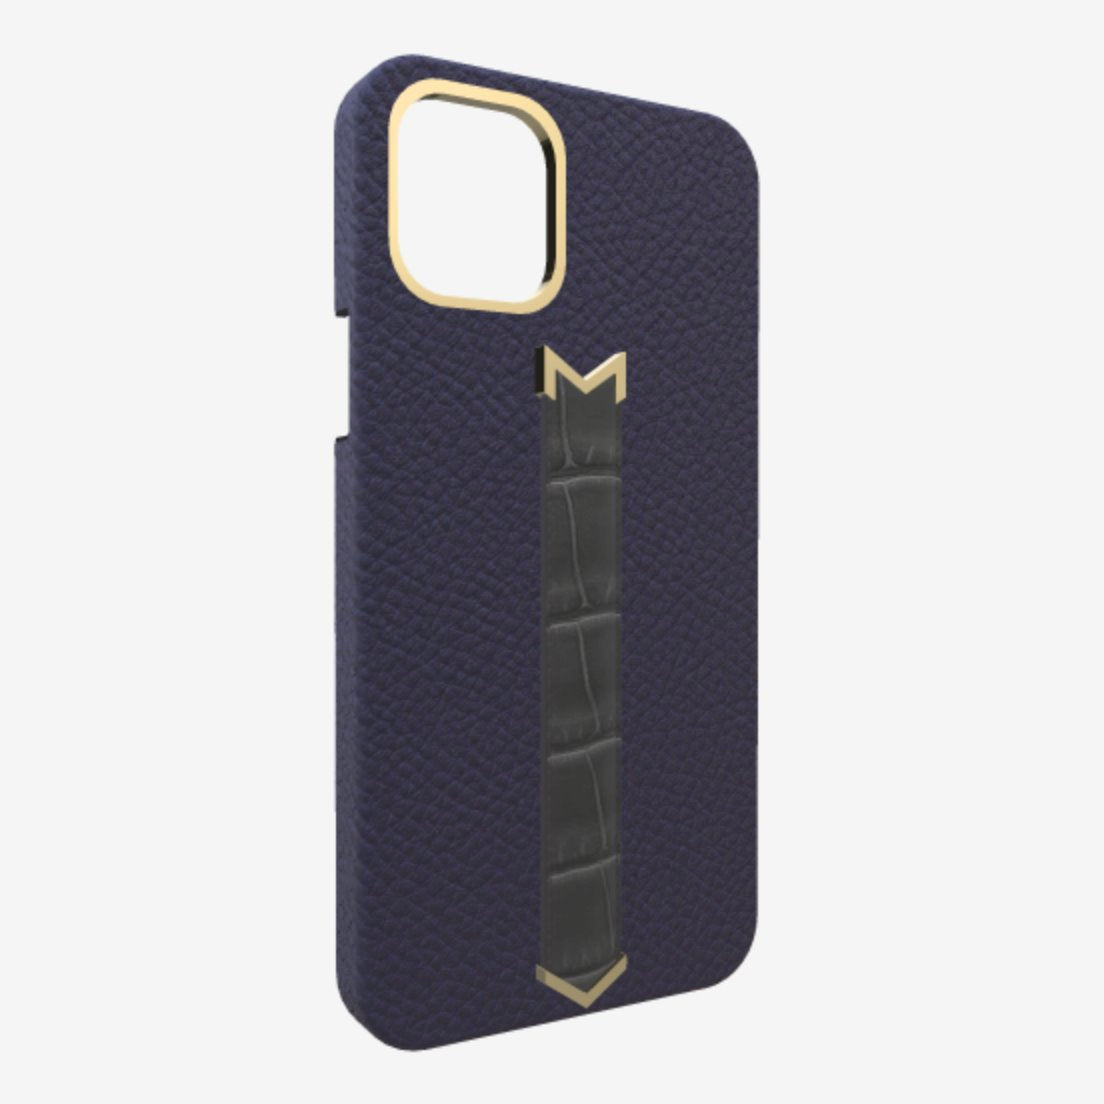 Gold Finger Strap Case for iPhone 13 Pro Max in Genuine Calfskin and Alligator Navy Blue Elite Grey 